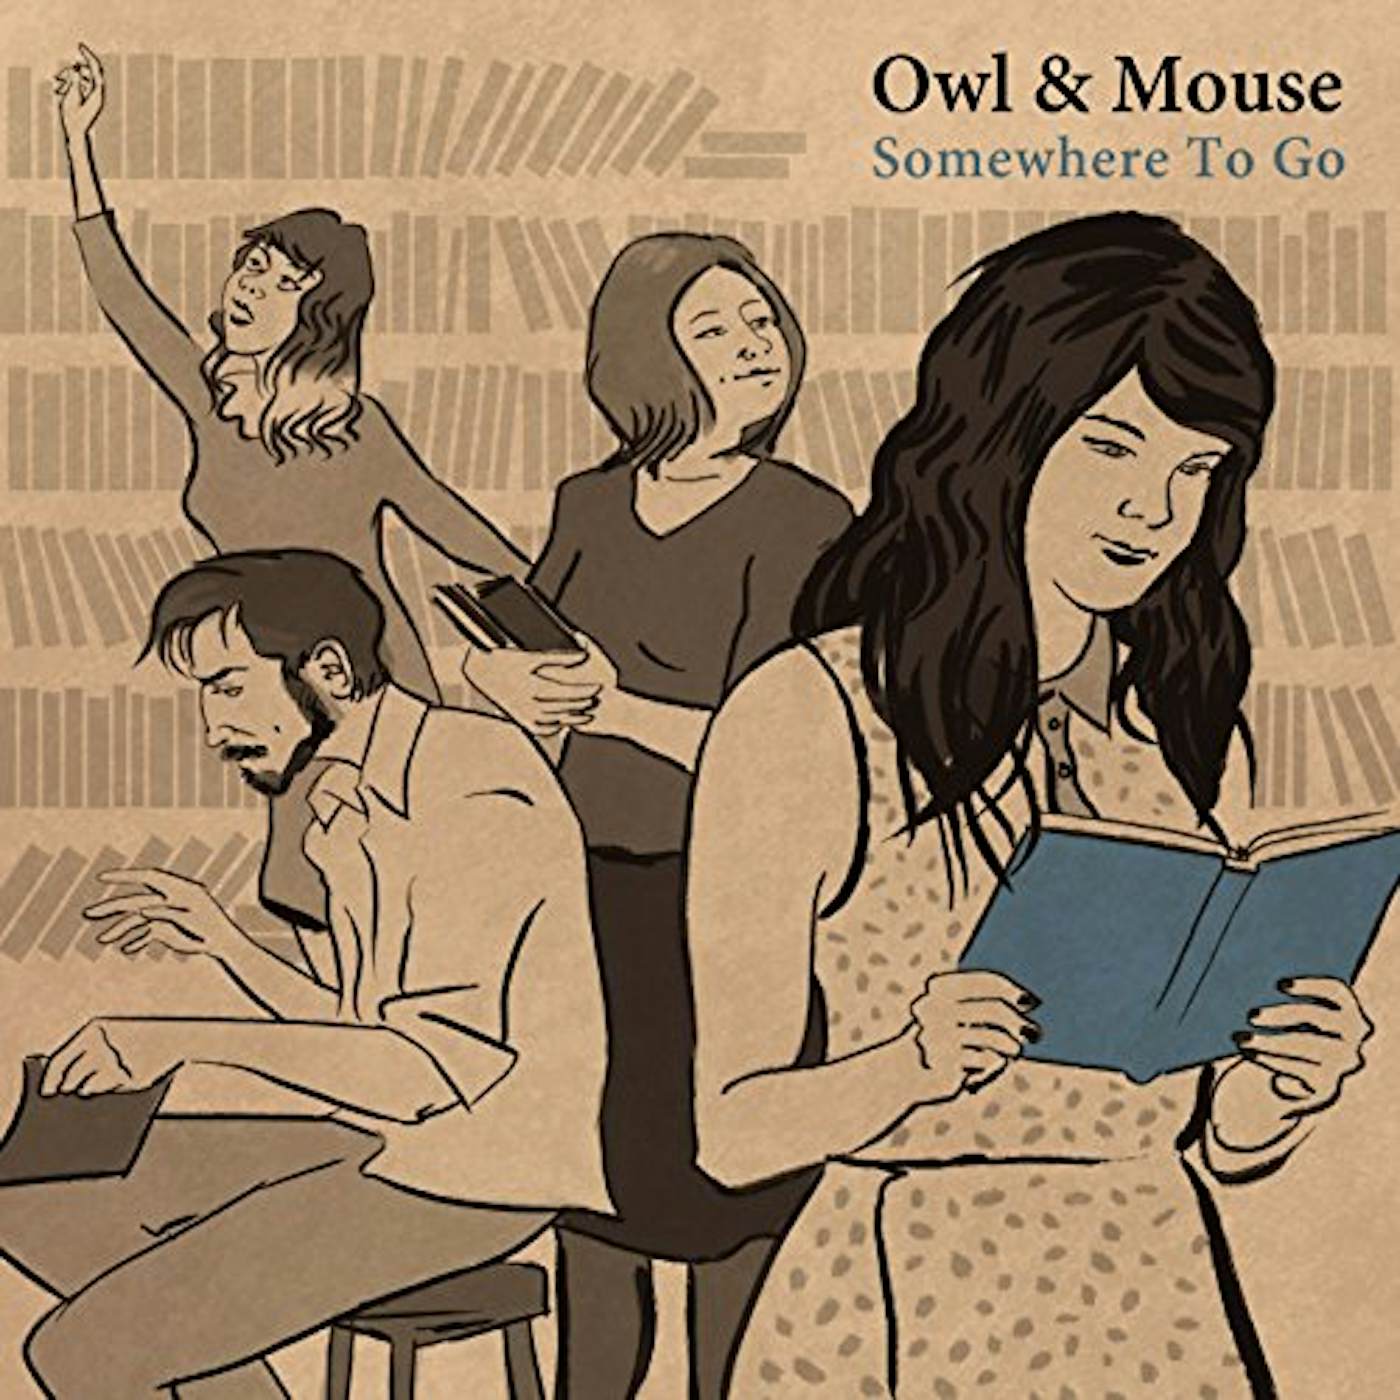 Owl & Mouse Somewhere to Go Vinyl Record